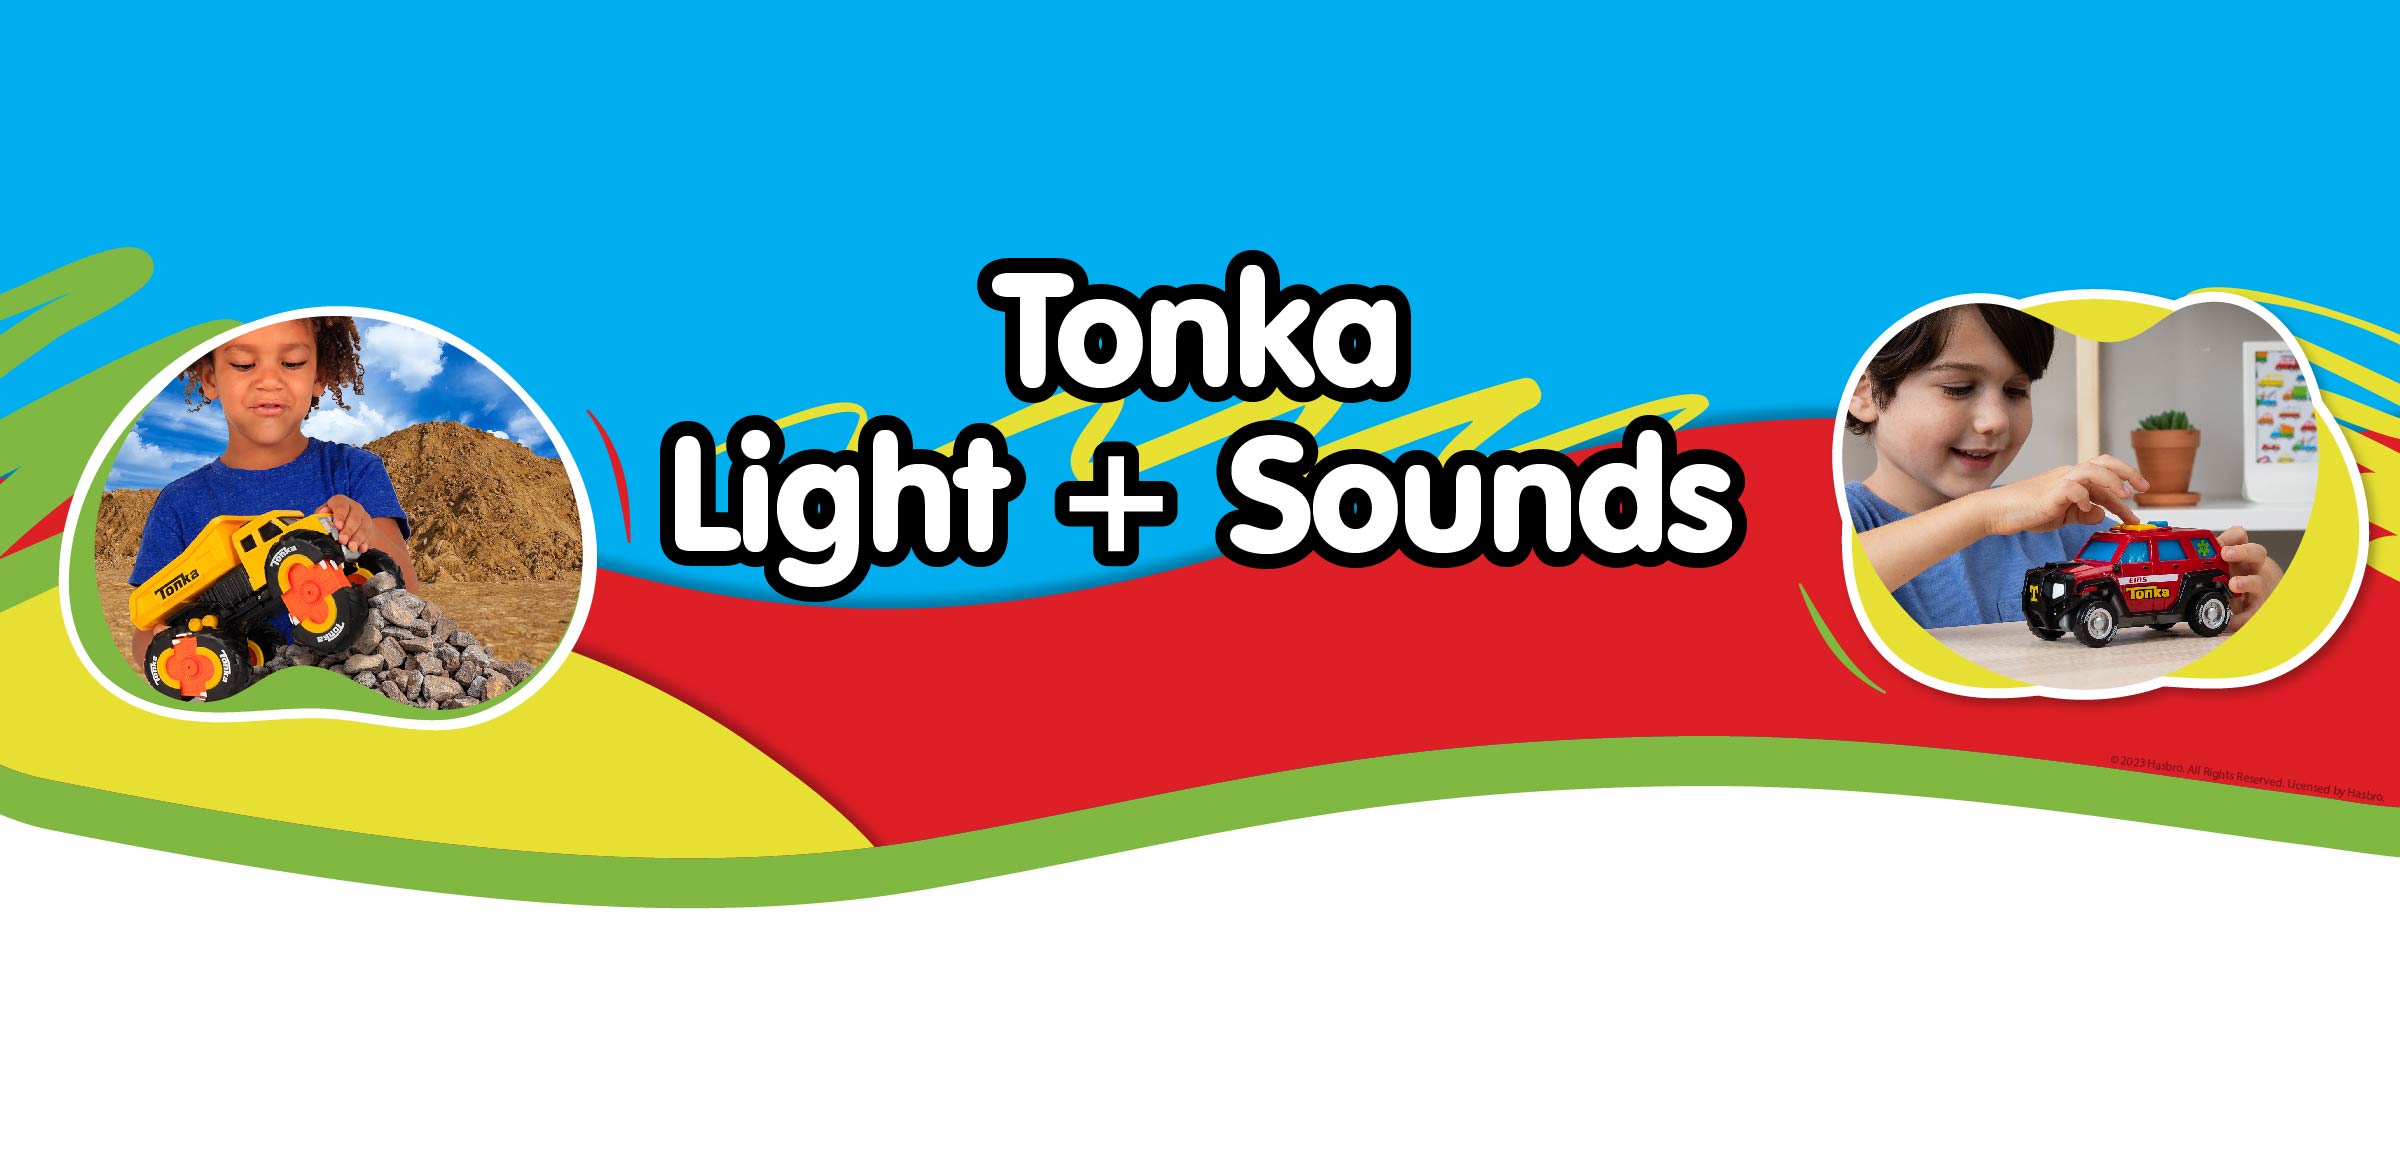 Tonka Lights + Sounds